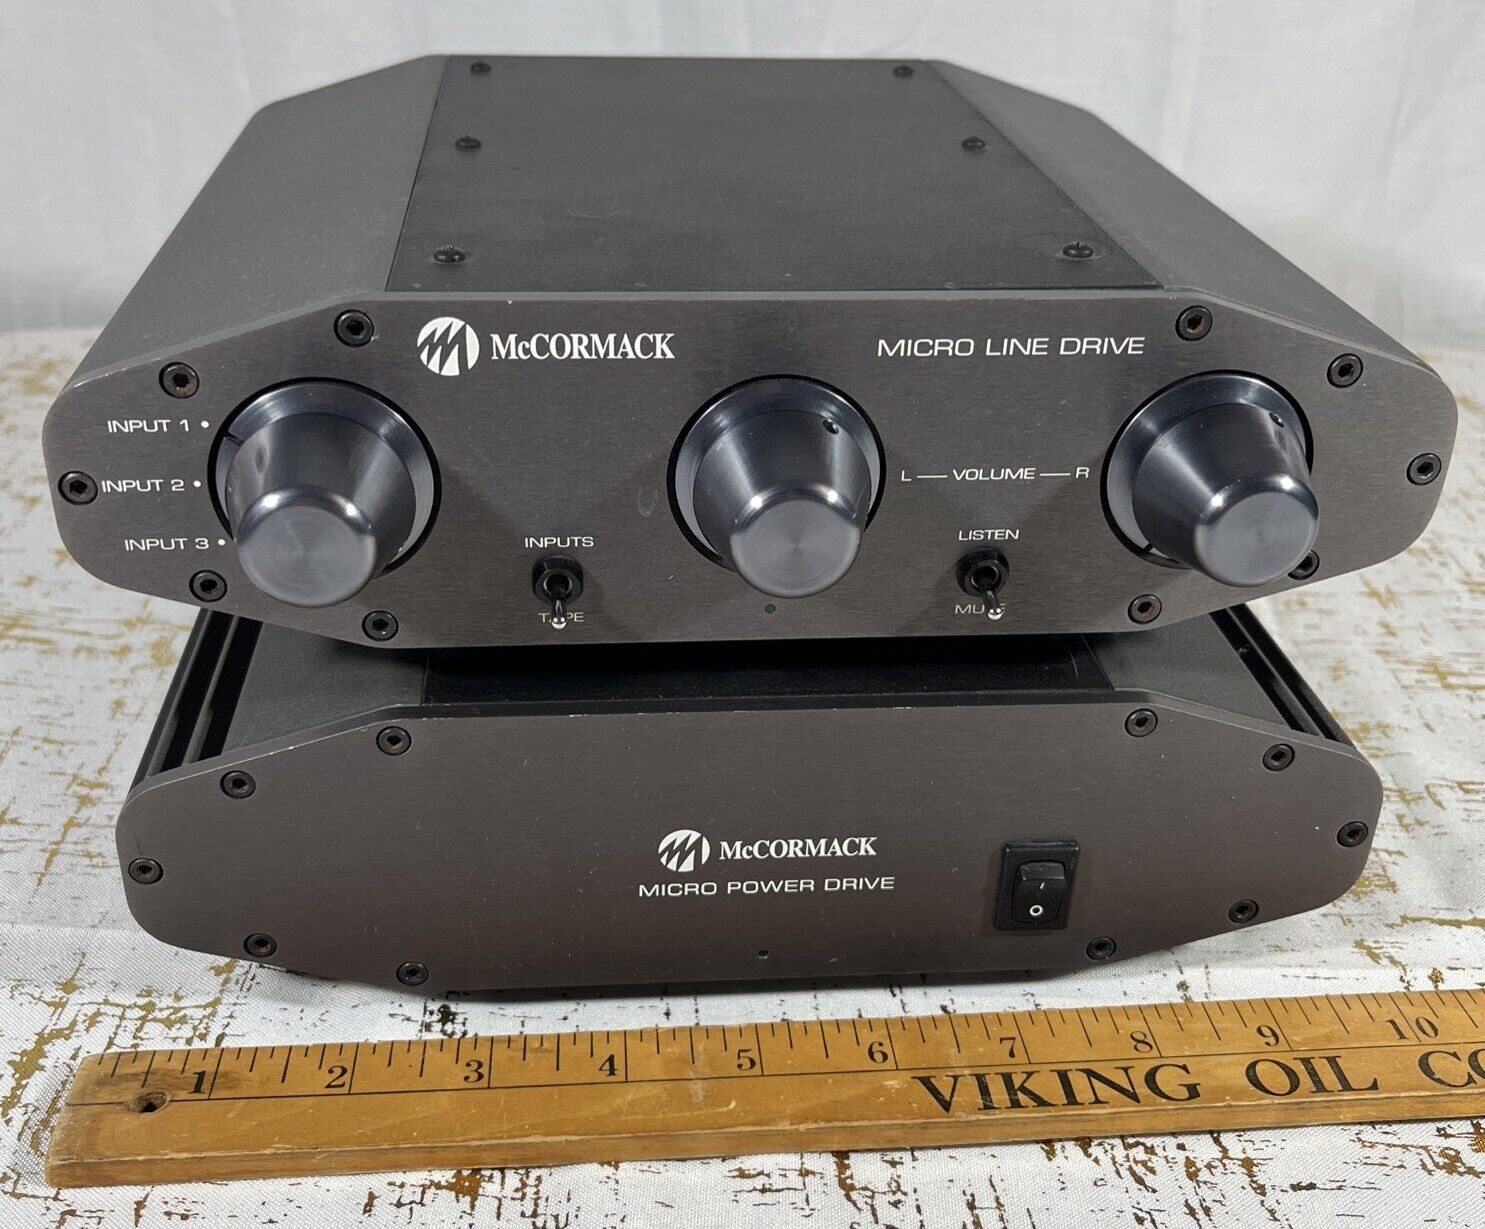 2 Pc Set McCormick Micro Line Drive Power Drive Amp Preamp Rare Audiophile VTG